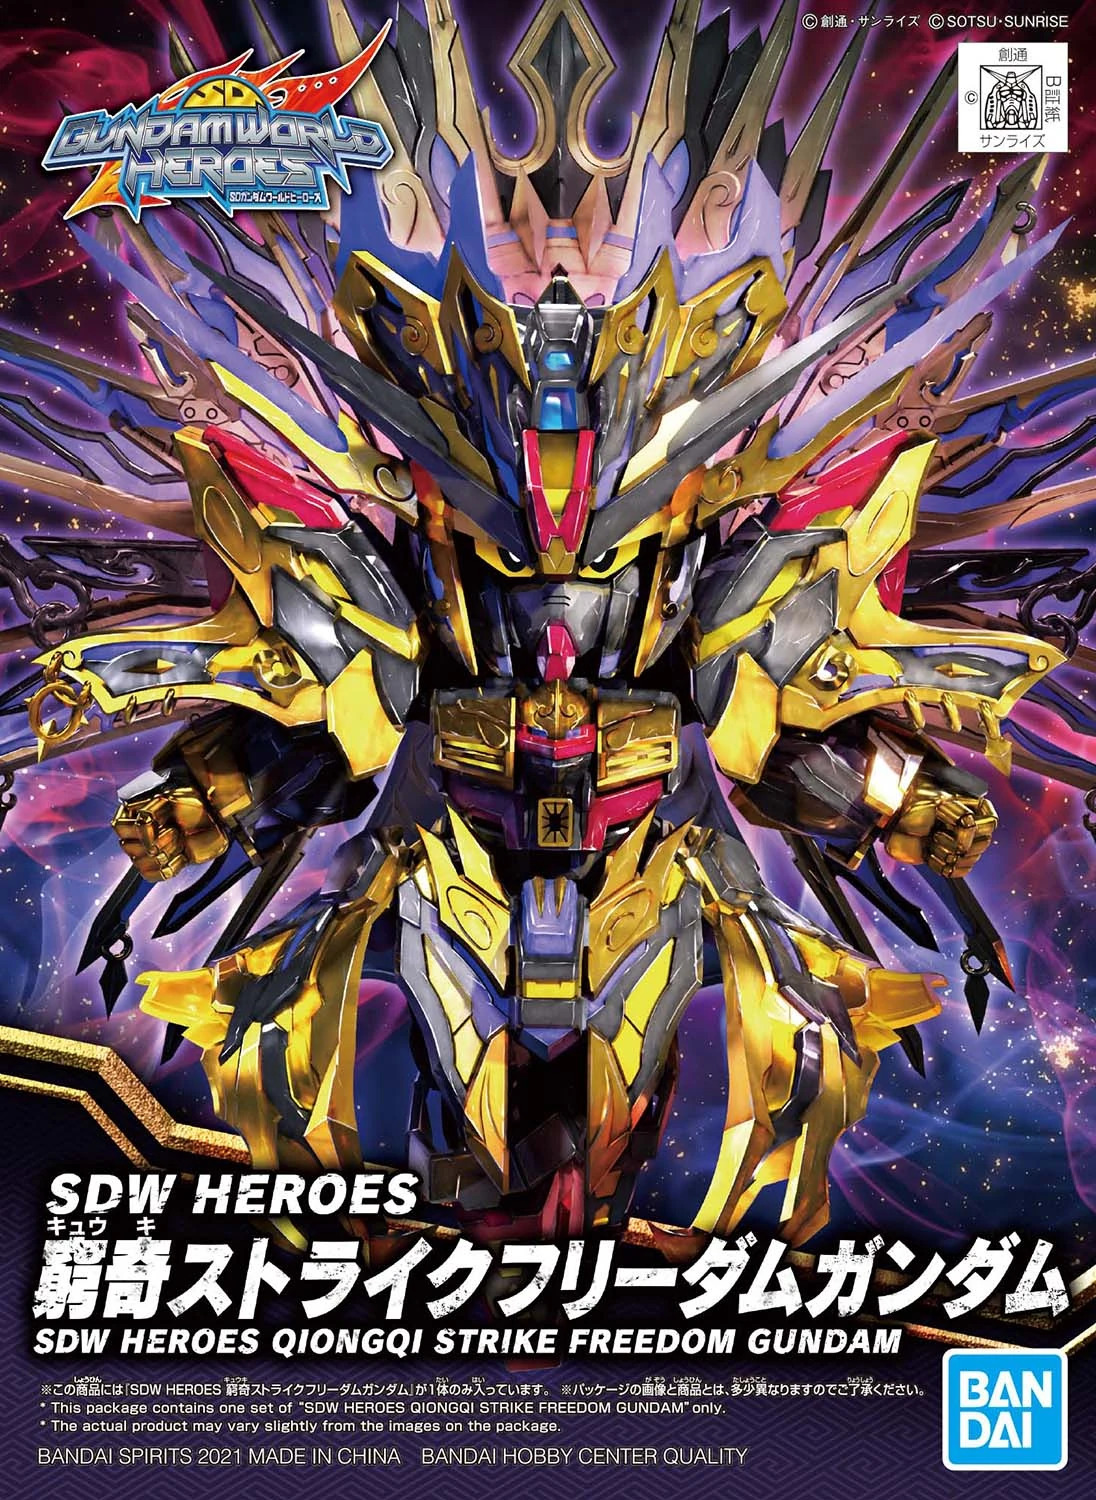 SD World Heroes - Qiongqi Strike Freedom Gundam